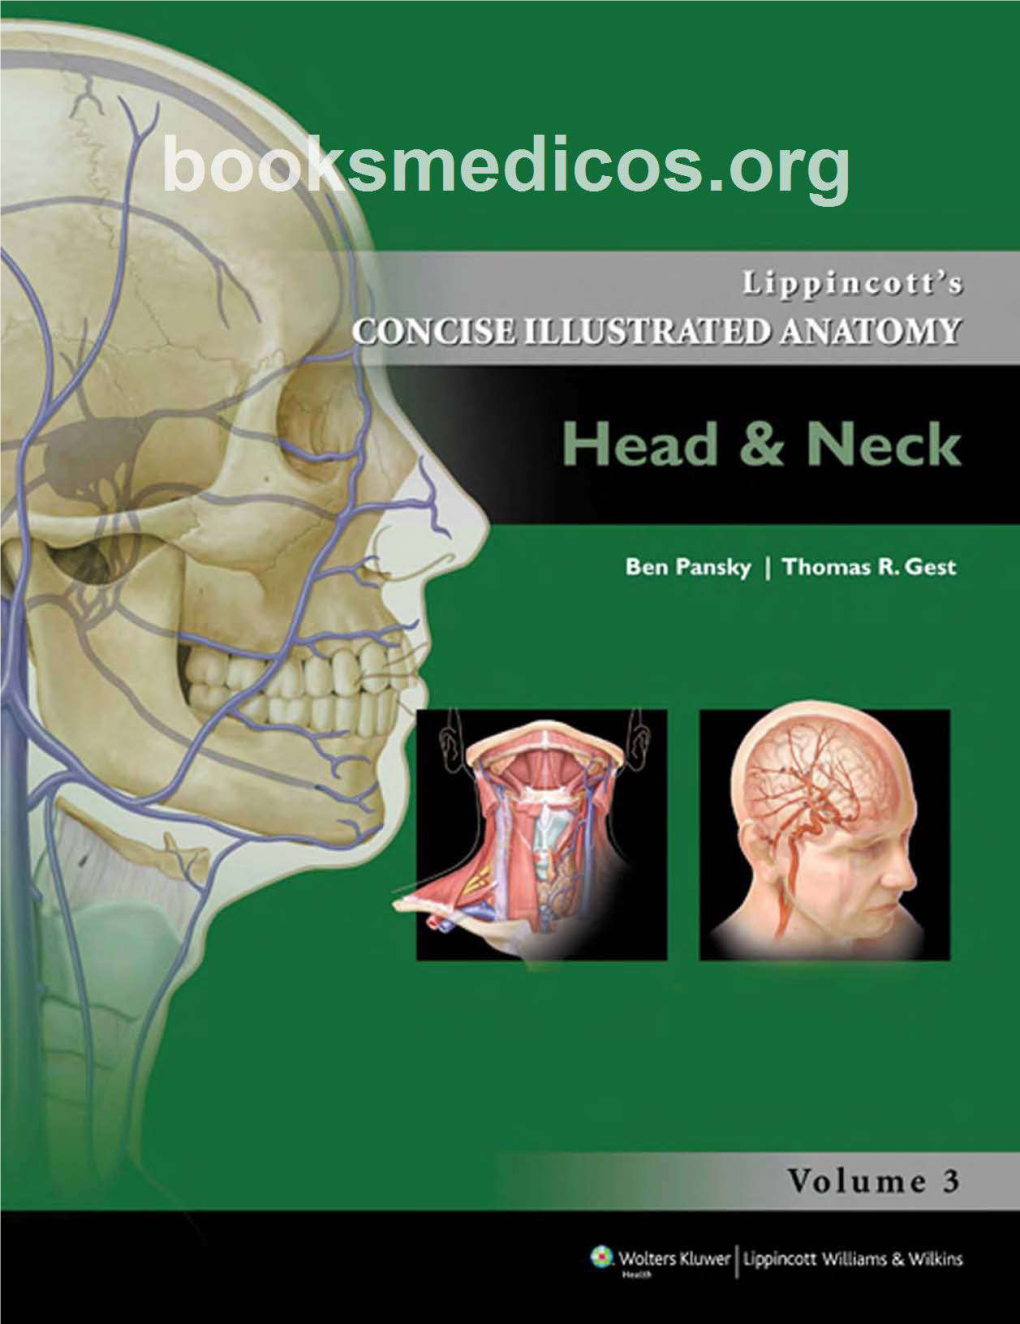 Ippincott's Concise Illustrated Anatomy. Vol. 3, Head & Neck